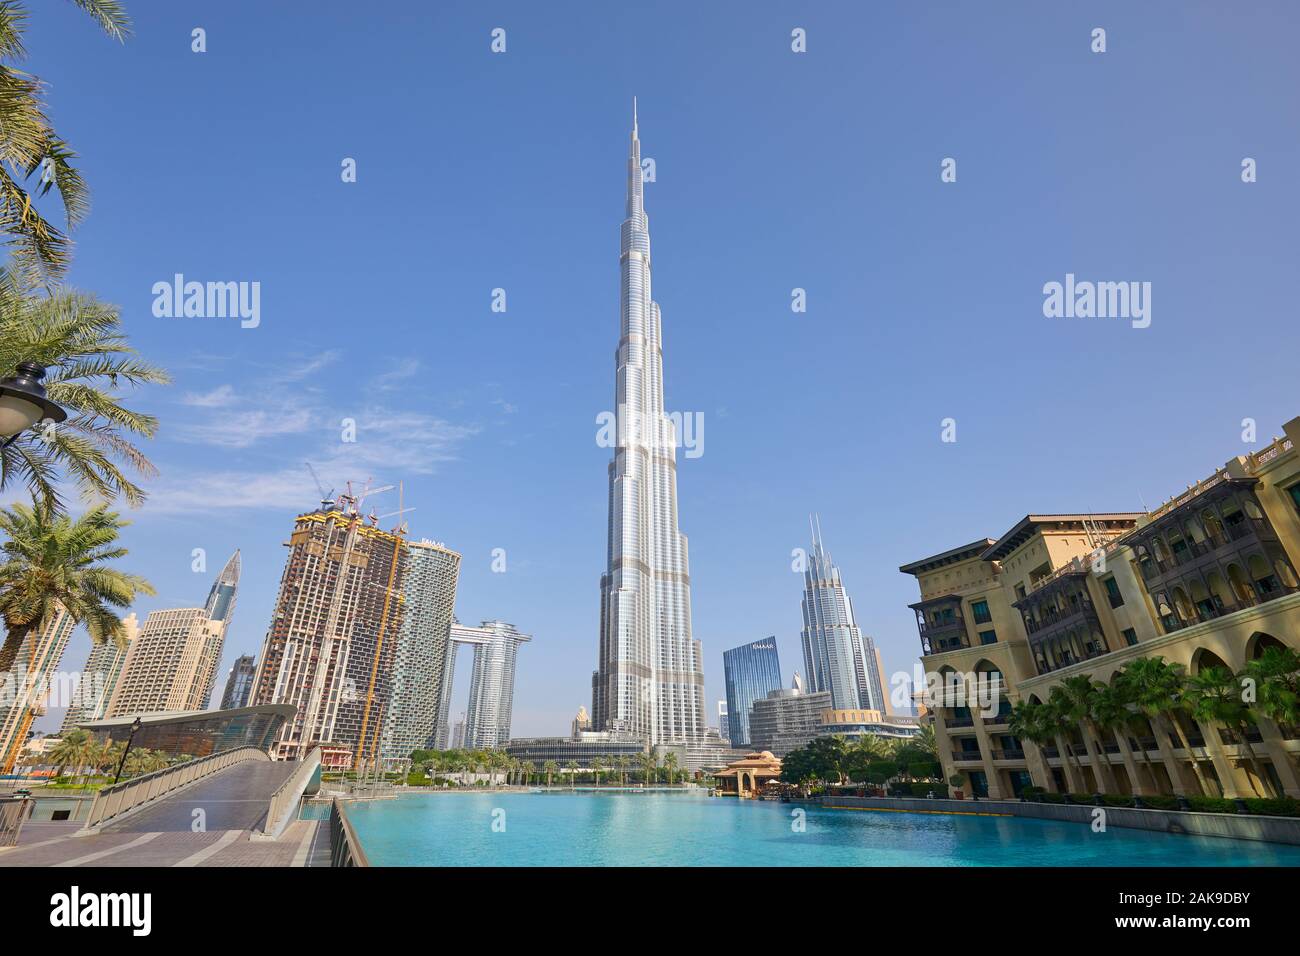 DUBAI, UNITED ARAB EMIRATES - NOVEMBER 19, 2019: Burj Khalifa skyscraper and artificial lake in a sunny morning Stock Photo